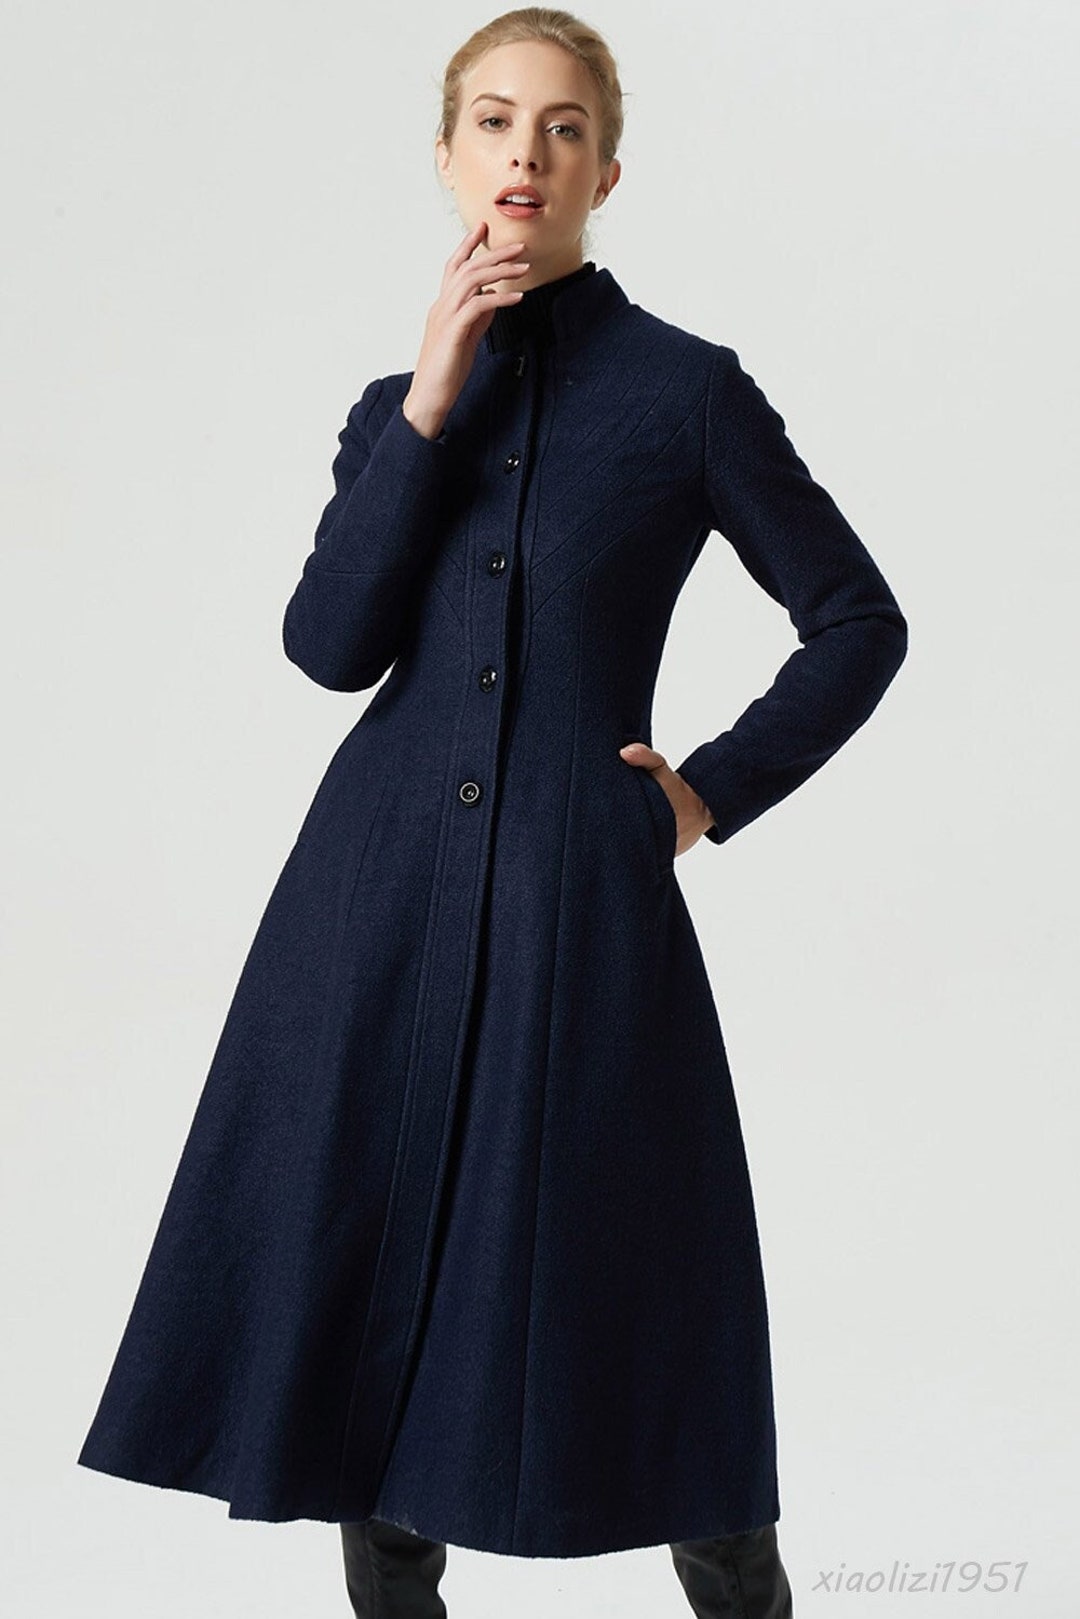 Midi Wool Coat, Warm Winter Coat Women, Navy Wool Coat, Women Coat for ...